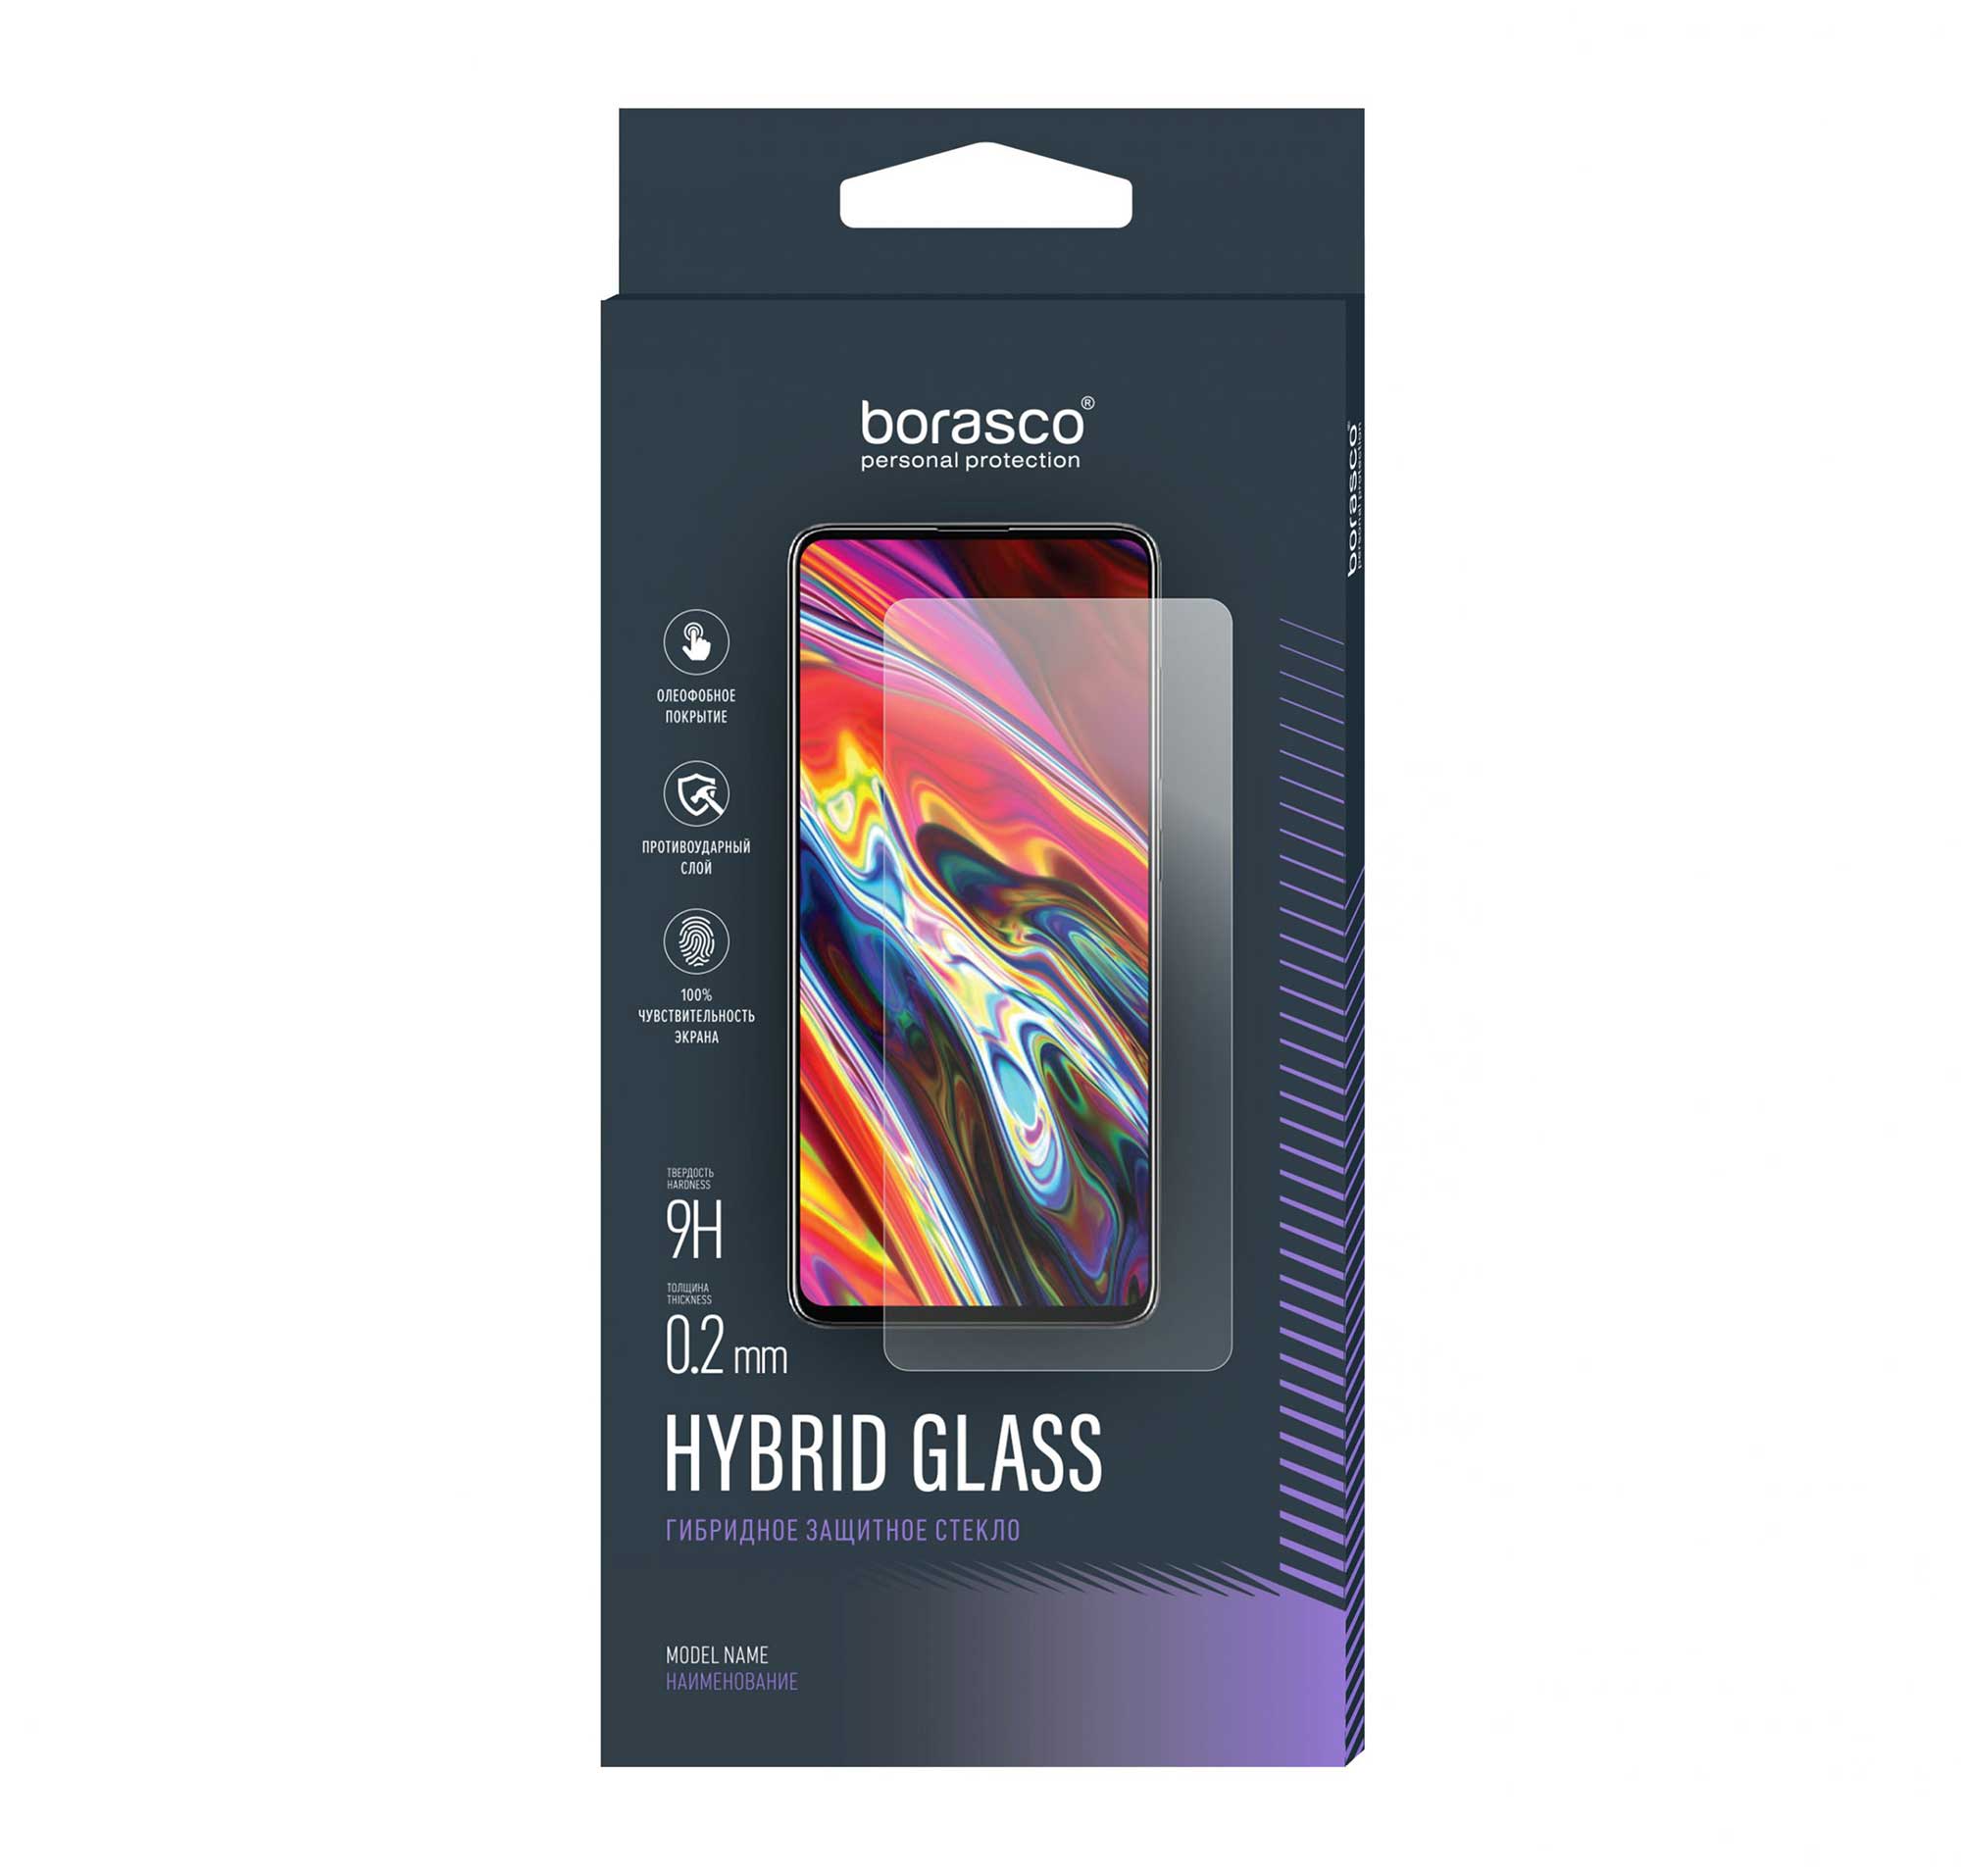 Защитное стекло Hybrid Glass для Itel A25 чехол mypads акварельная планета для itel a25 itel a25 pro itel a35 задняя панель накладка бампер